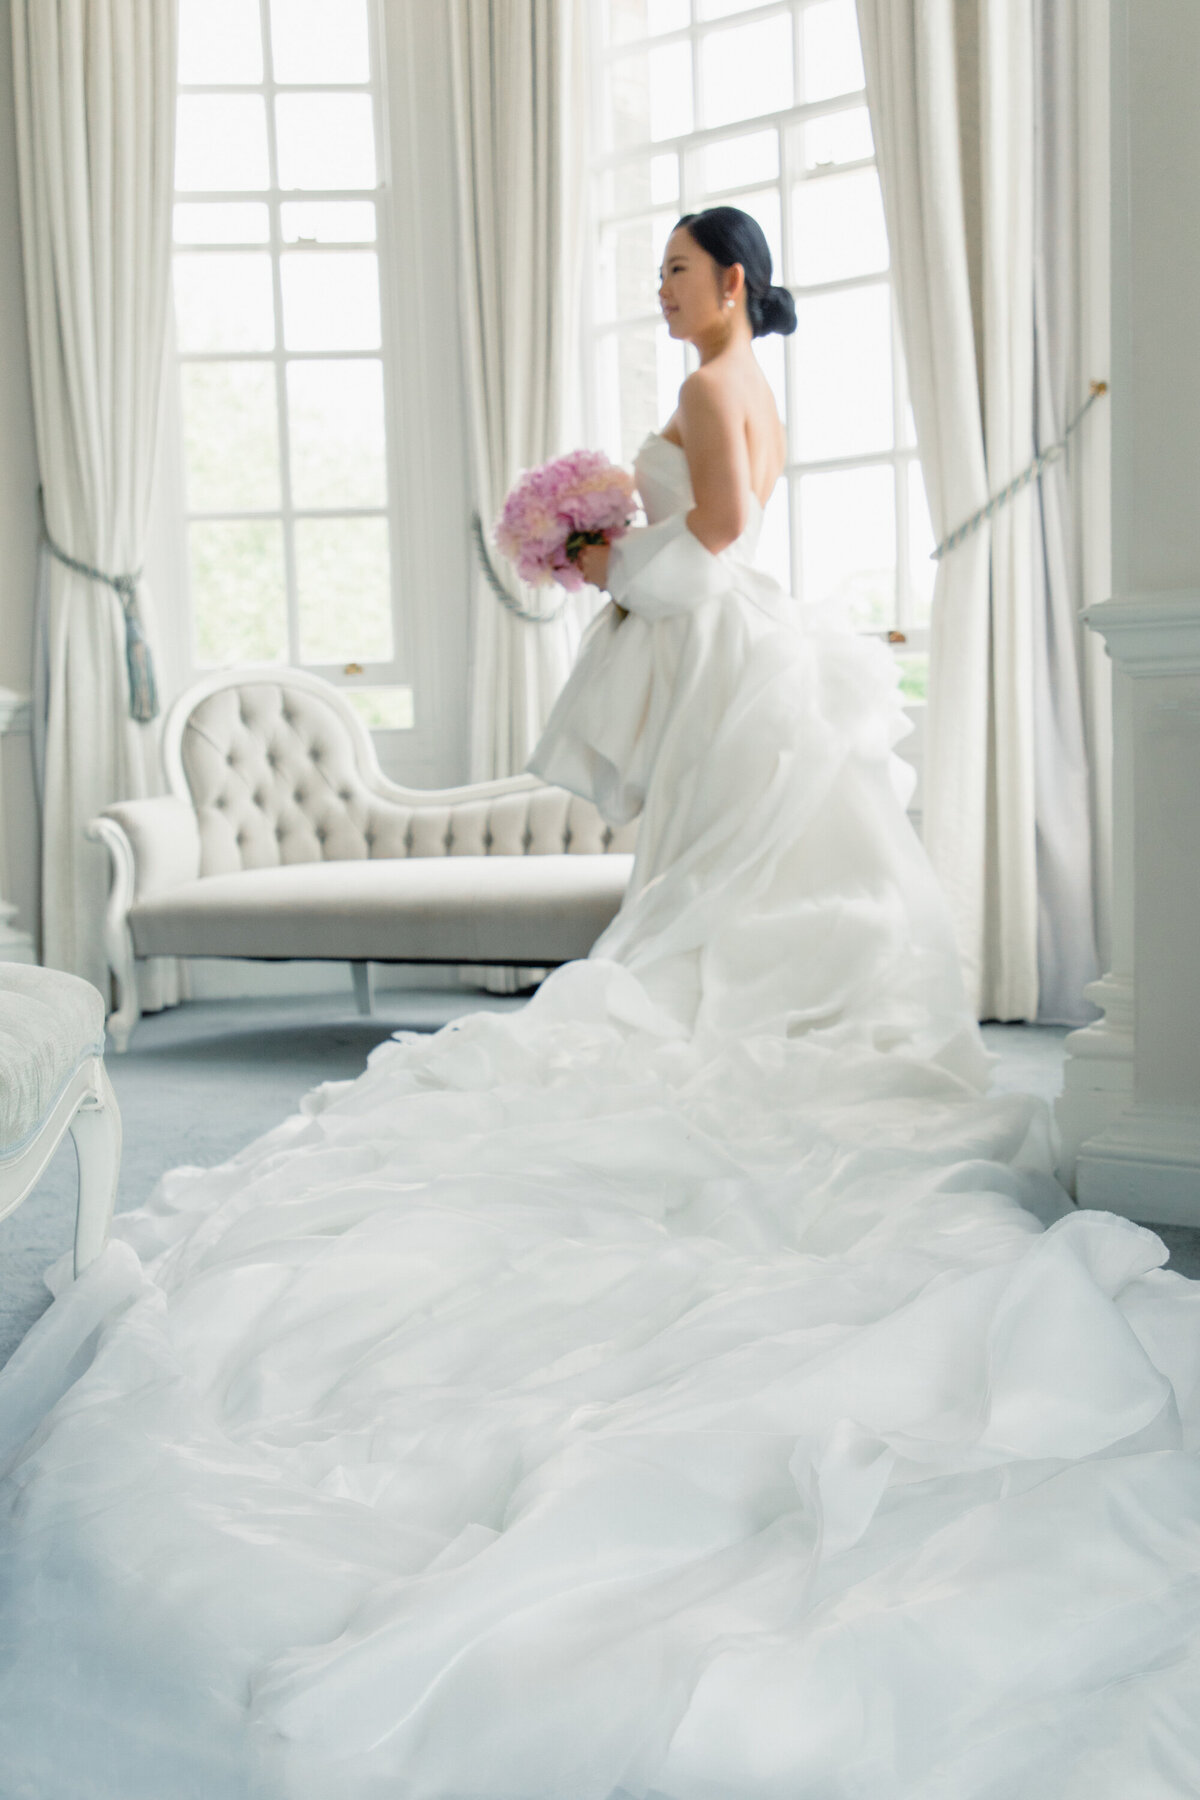 Hedsor-House-Editorial-Wedding-Photographer-Colette-Aurelia-16